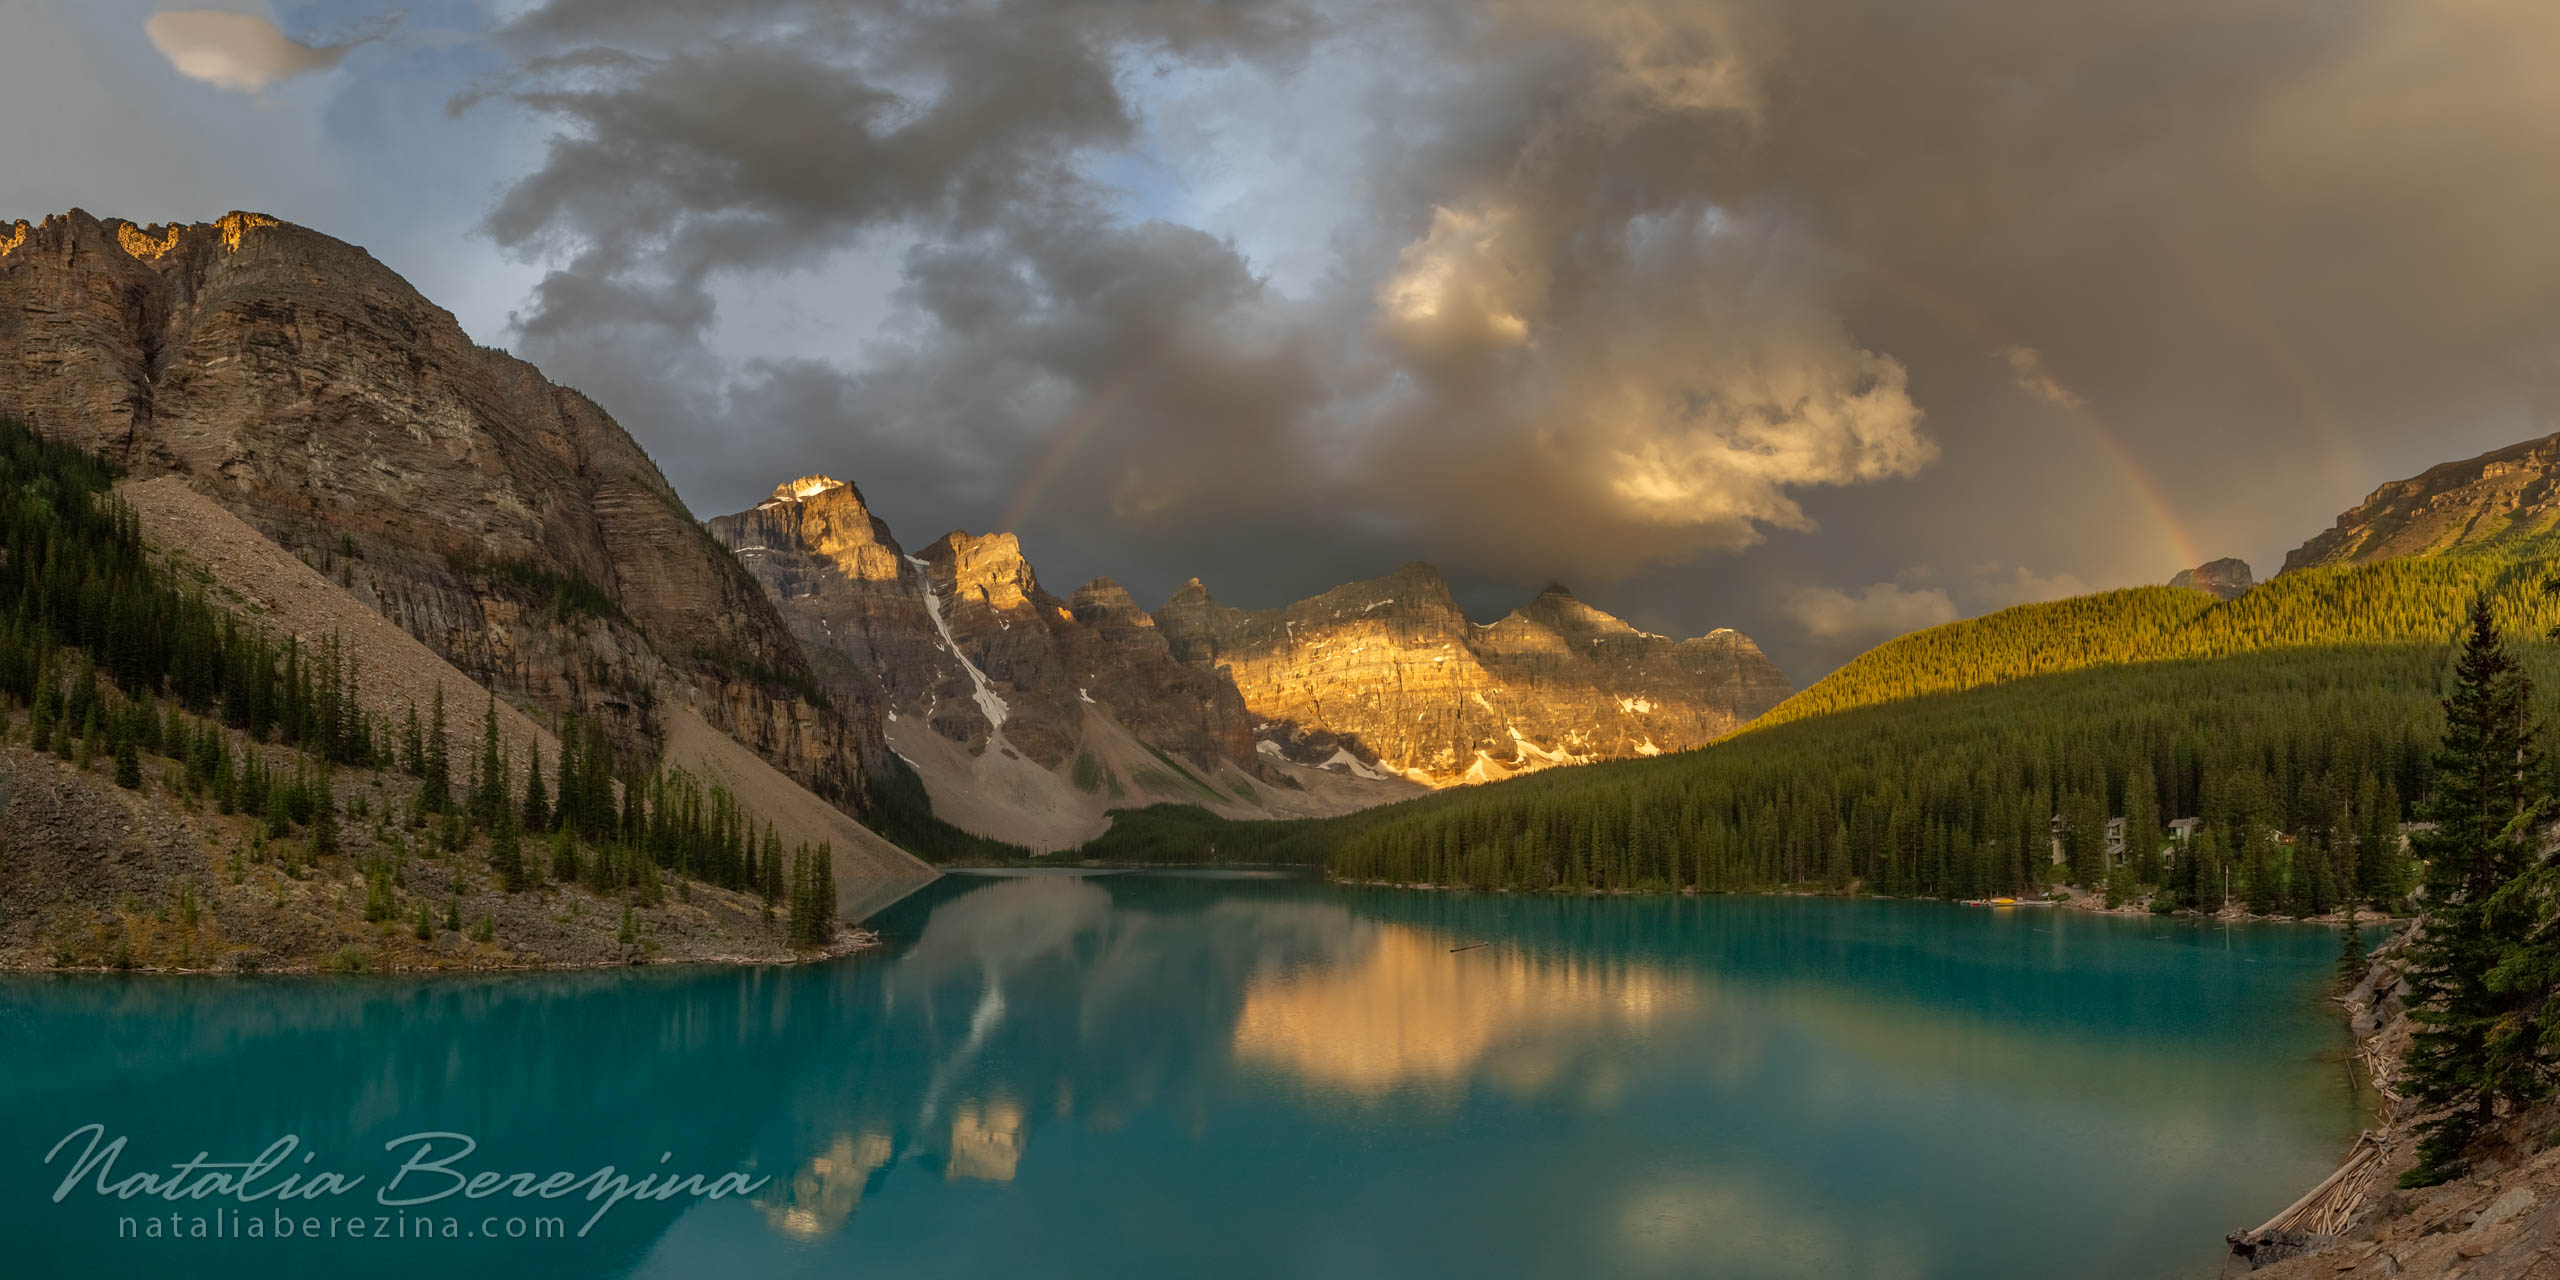 Canada, Rocky Mountains, cloud, sky, reflection, gold, rainbow, 2x1 CA1-NBDK1U7873-P - Rocky Mountain, Canada - Natalia Berezina Photography